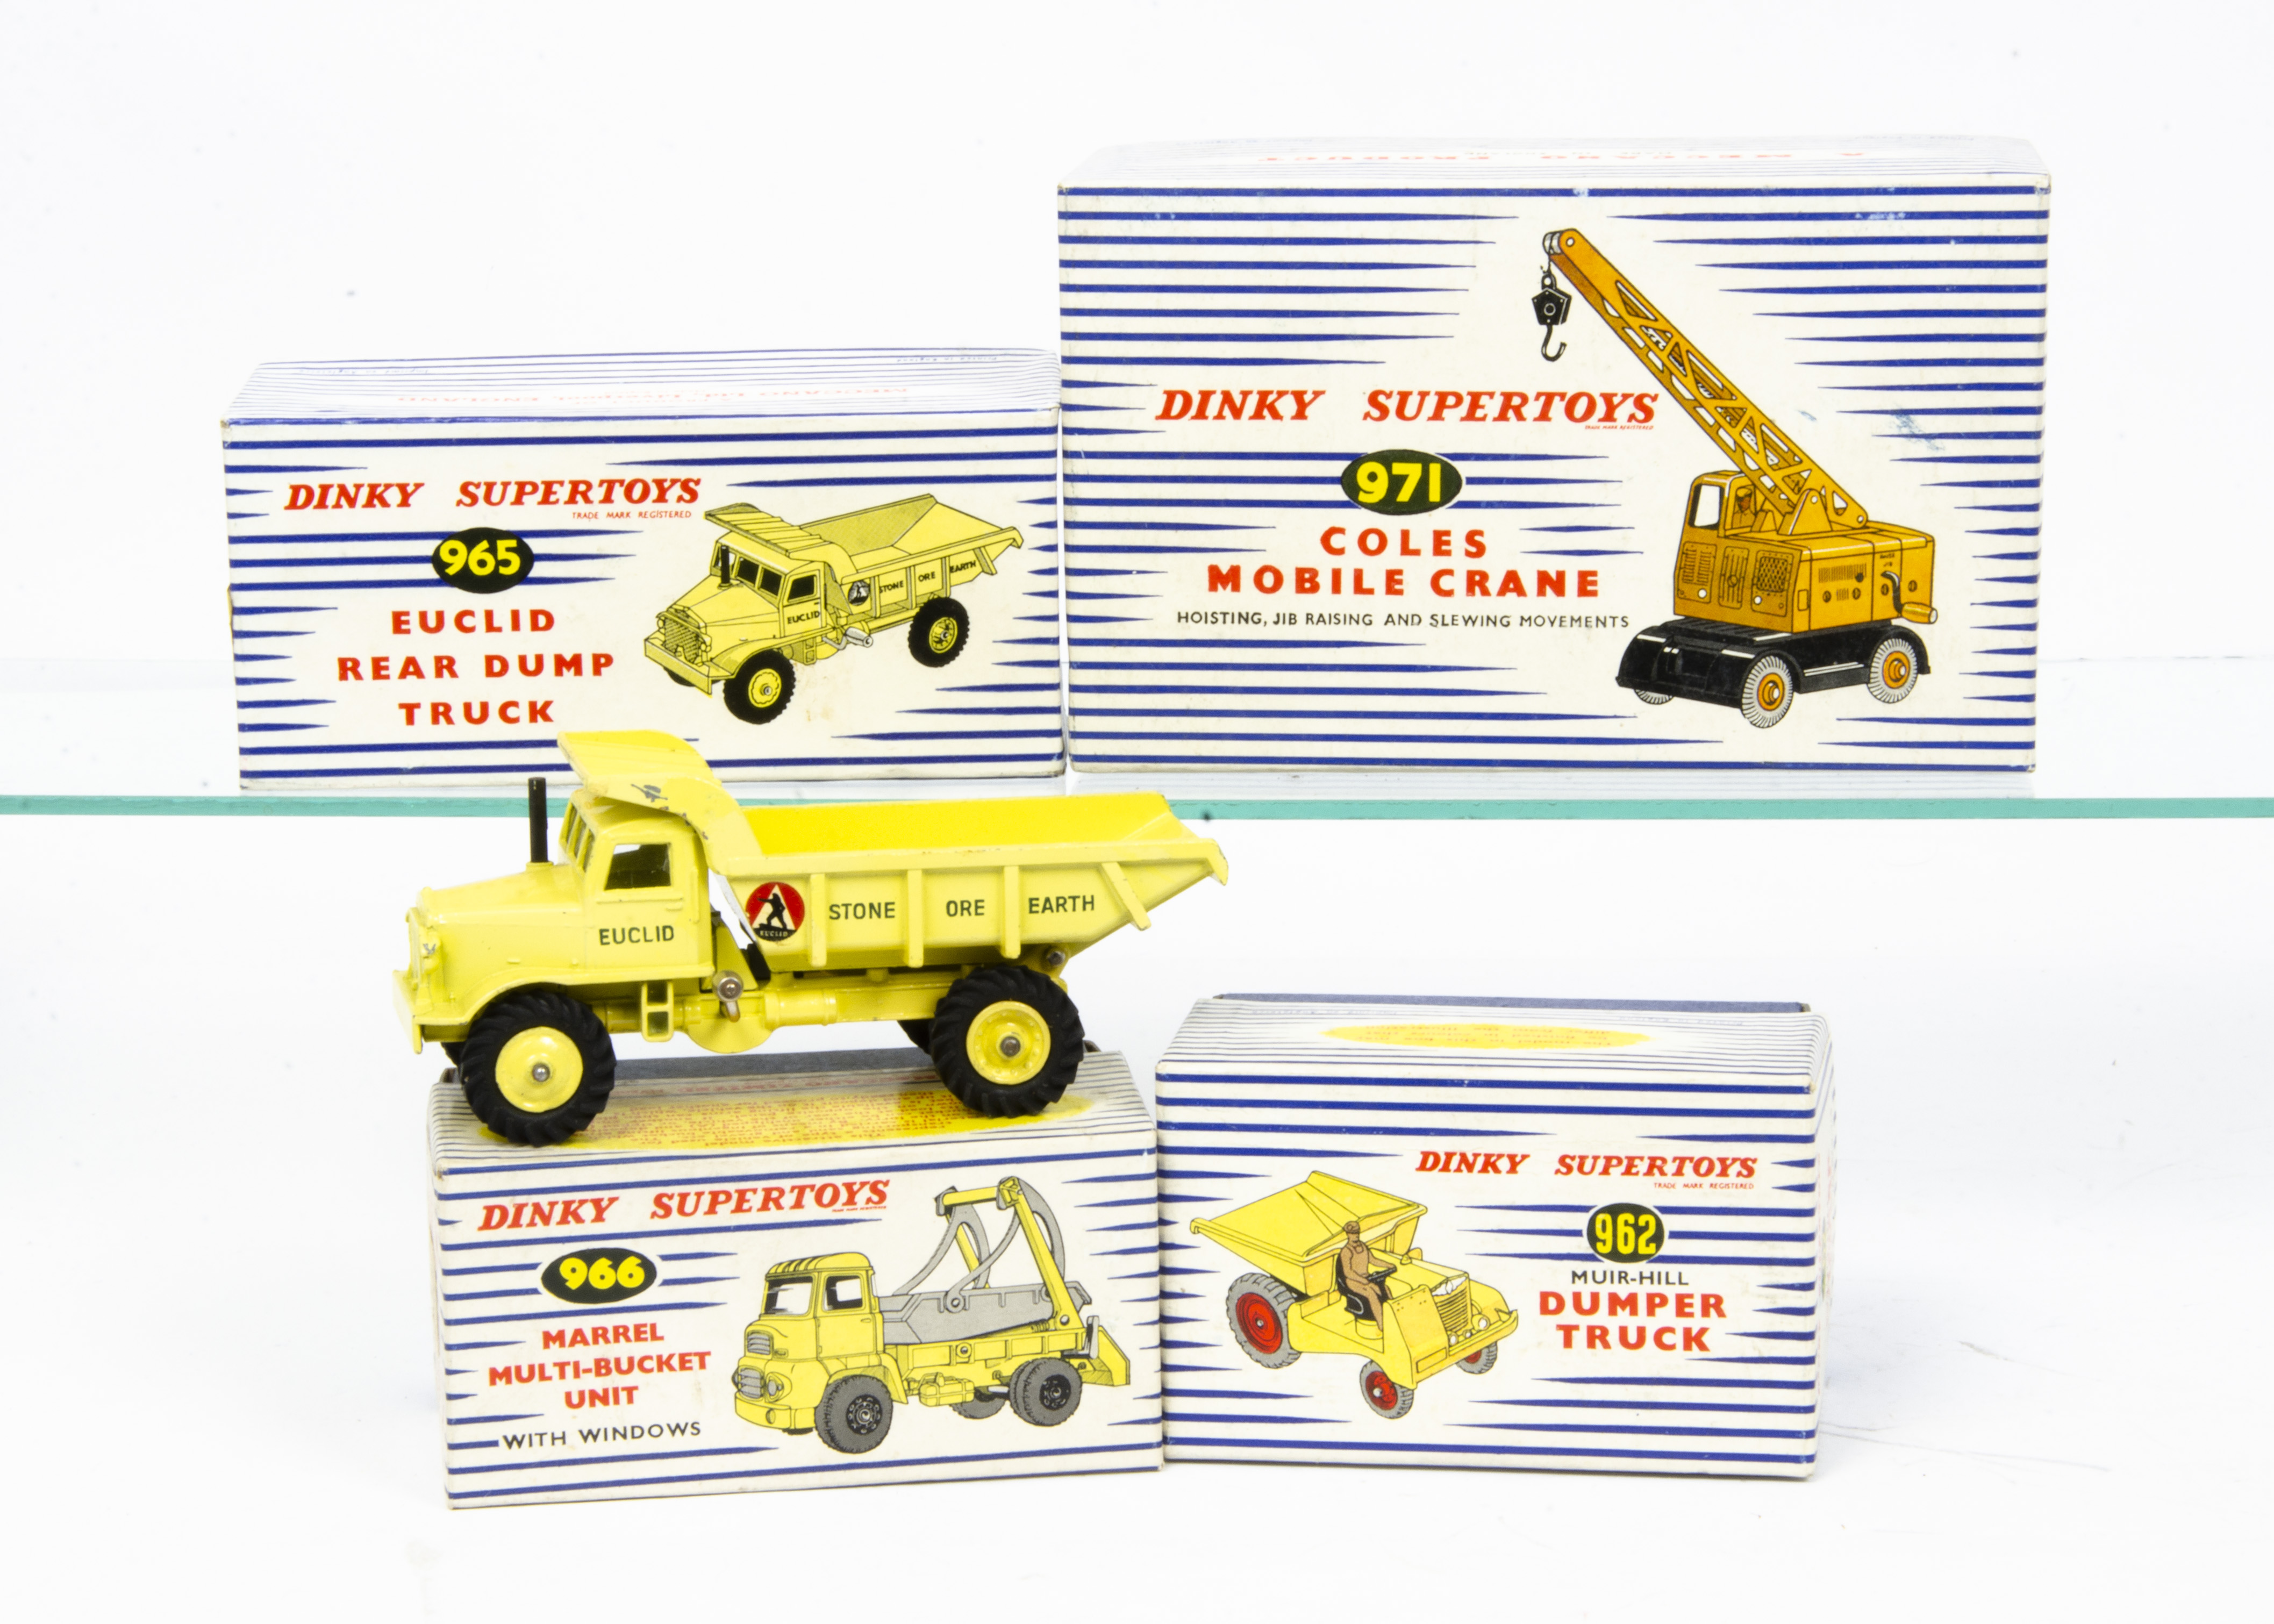 Dinky Supertoys Construction Vehicles, 971 Coles Mobile Crane, 962 Muir-Hill Dumper Truck, 965